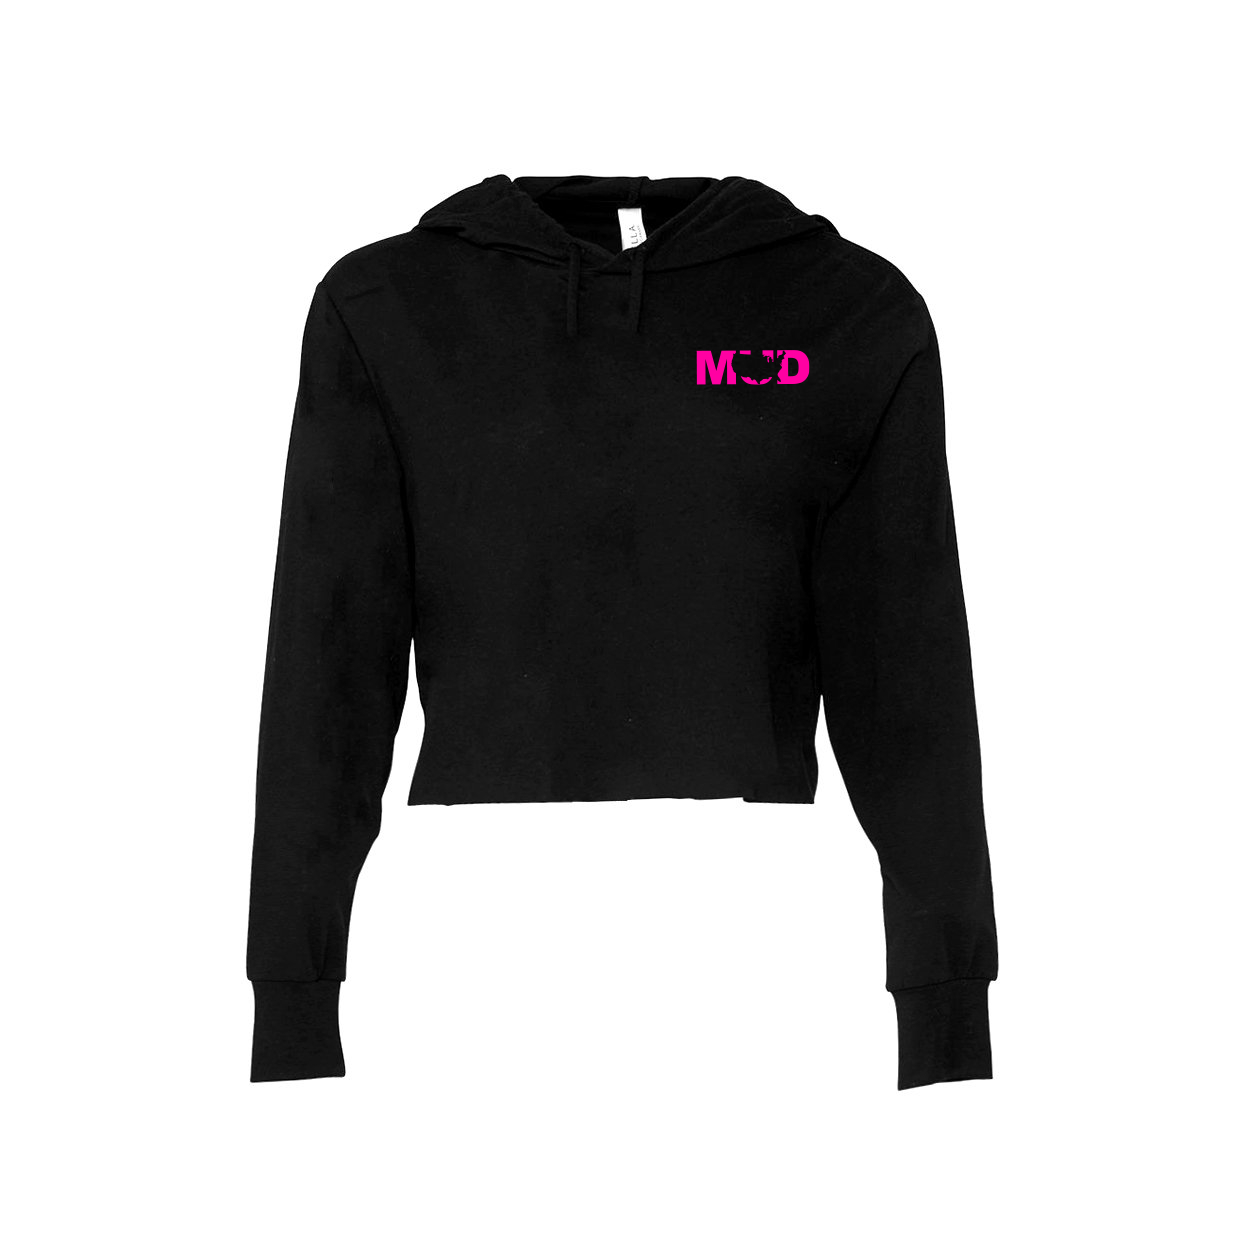 Mud United States Night Out Womens Cropped Sweatshirt Black (Pink Logo)